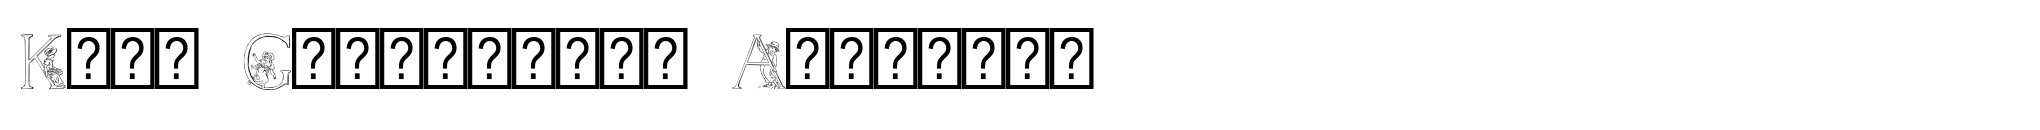 Kate Greenaways Alphabet image